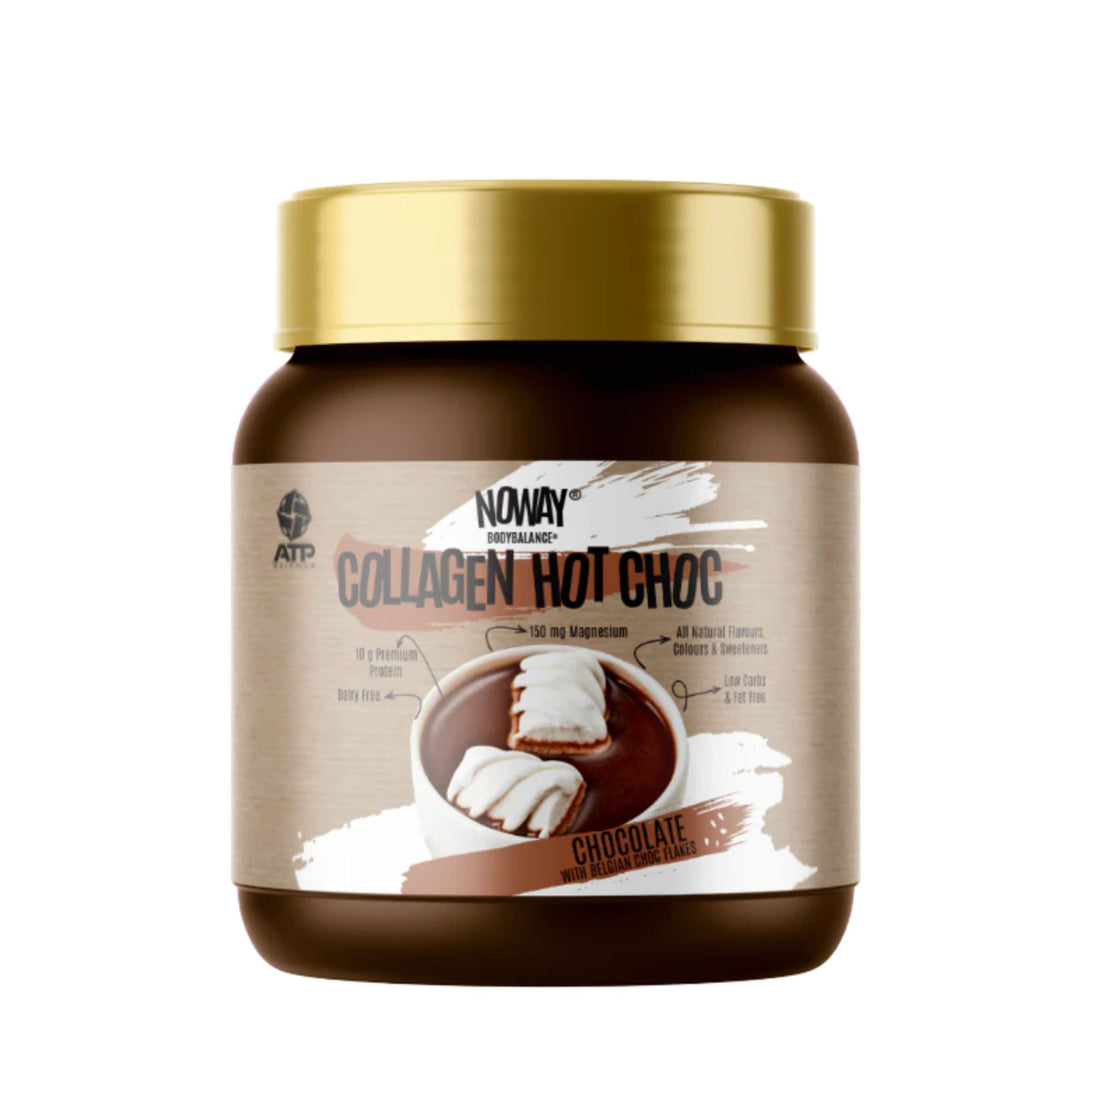 ATP Noway Hot Chocolate Collagen